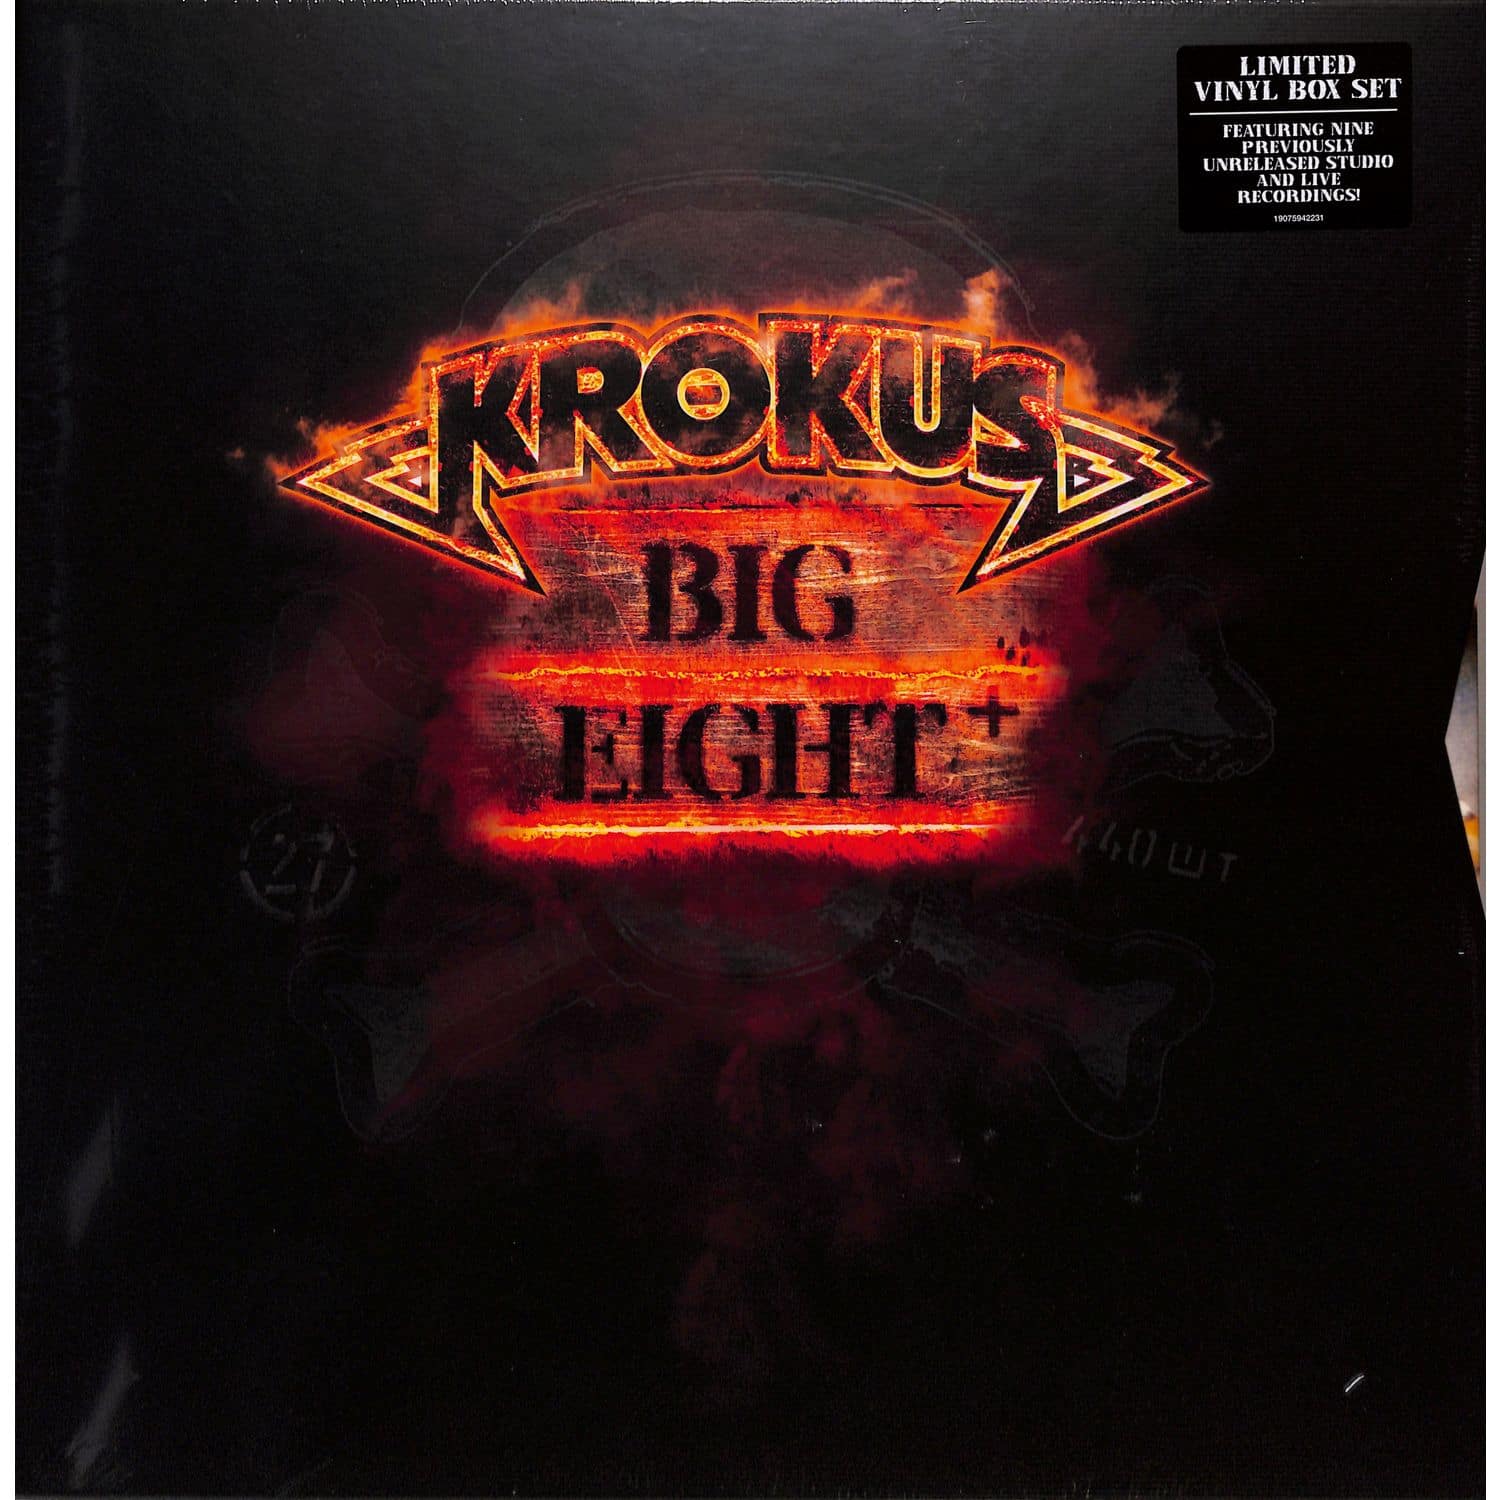 Krokus - THE BIG EIGHT 